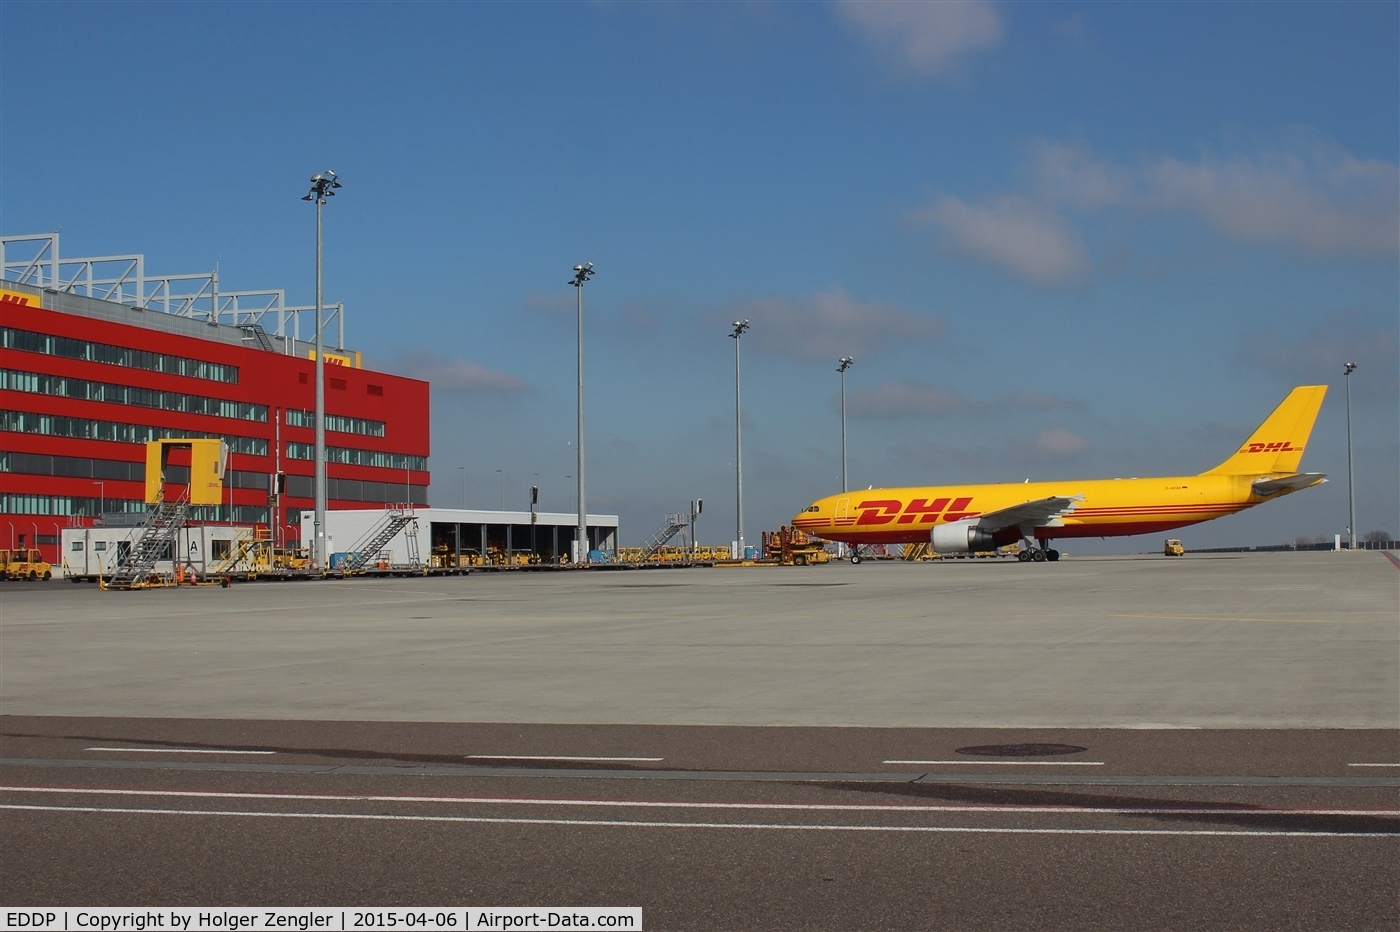 Leipzig/Halle Airport, Leipzig/Halle Germany (EDDP) - Lonesome one on apron 4 west....